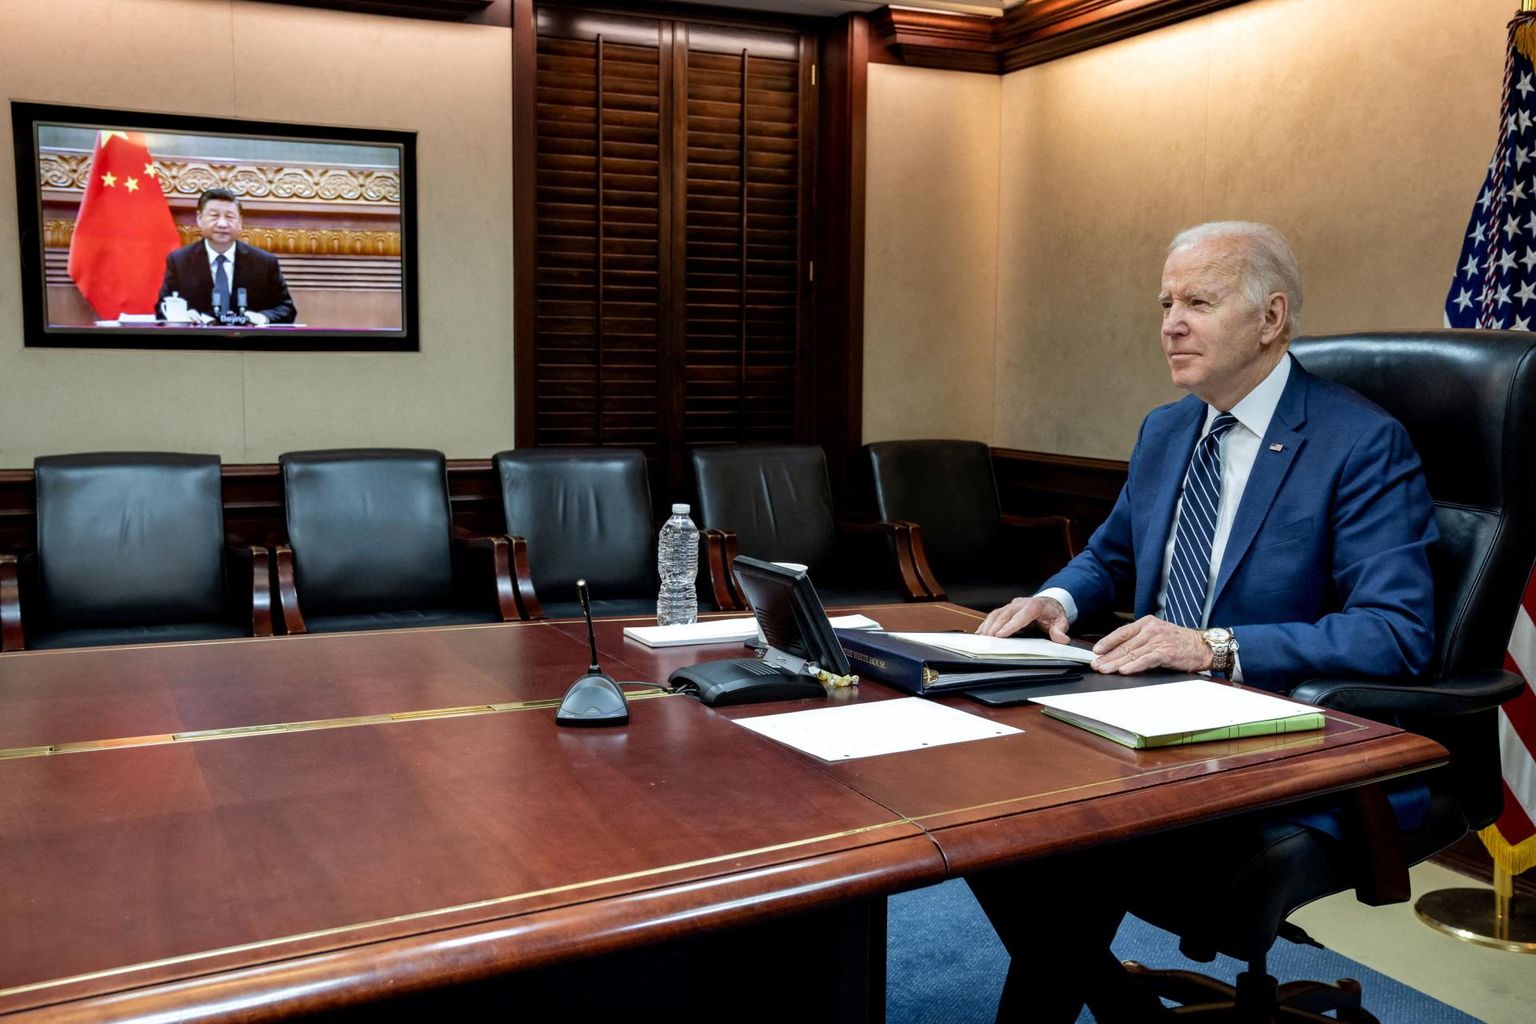 USA president Joe Biden Hiina presidendi Xi Jinpingiga videokõnet pidamas 18. märtsil 2022. 